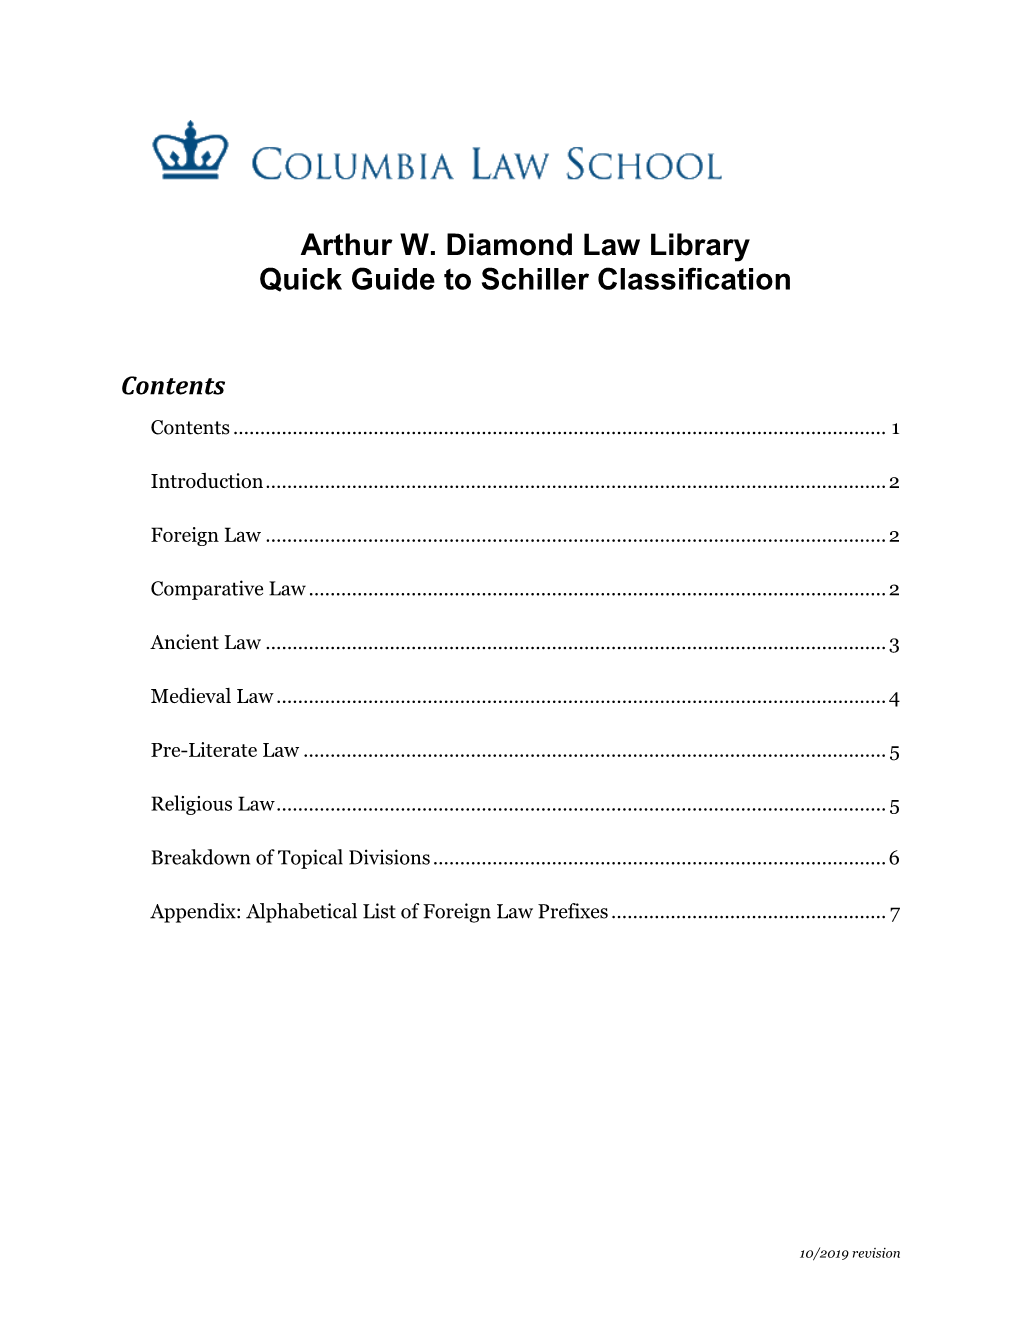 Arthur W. Diamond Law Library Quick Guide to Schiller Classification